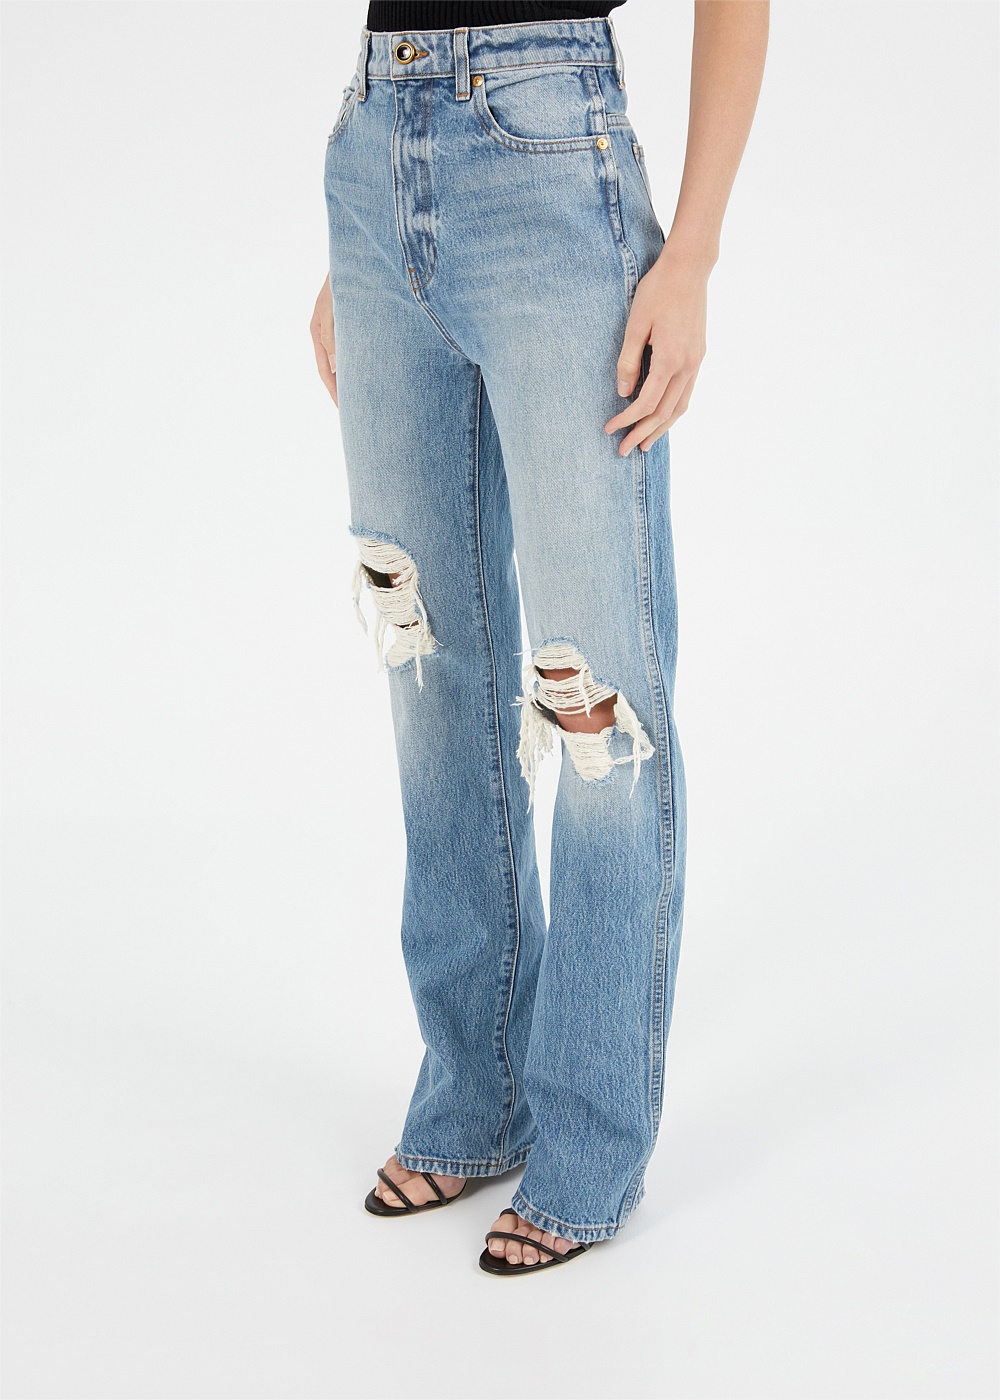 Shop Khaite Danielle Straight-Leg Distressed Jeans | Harrolds Australia